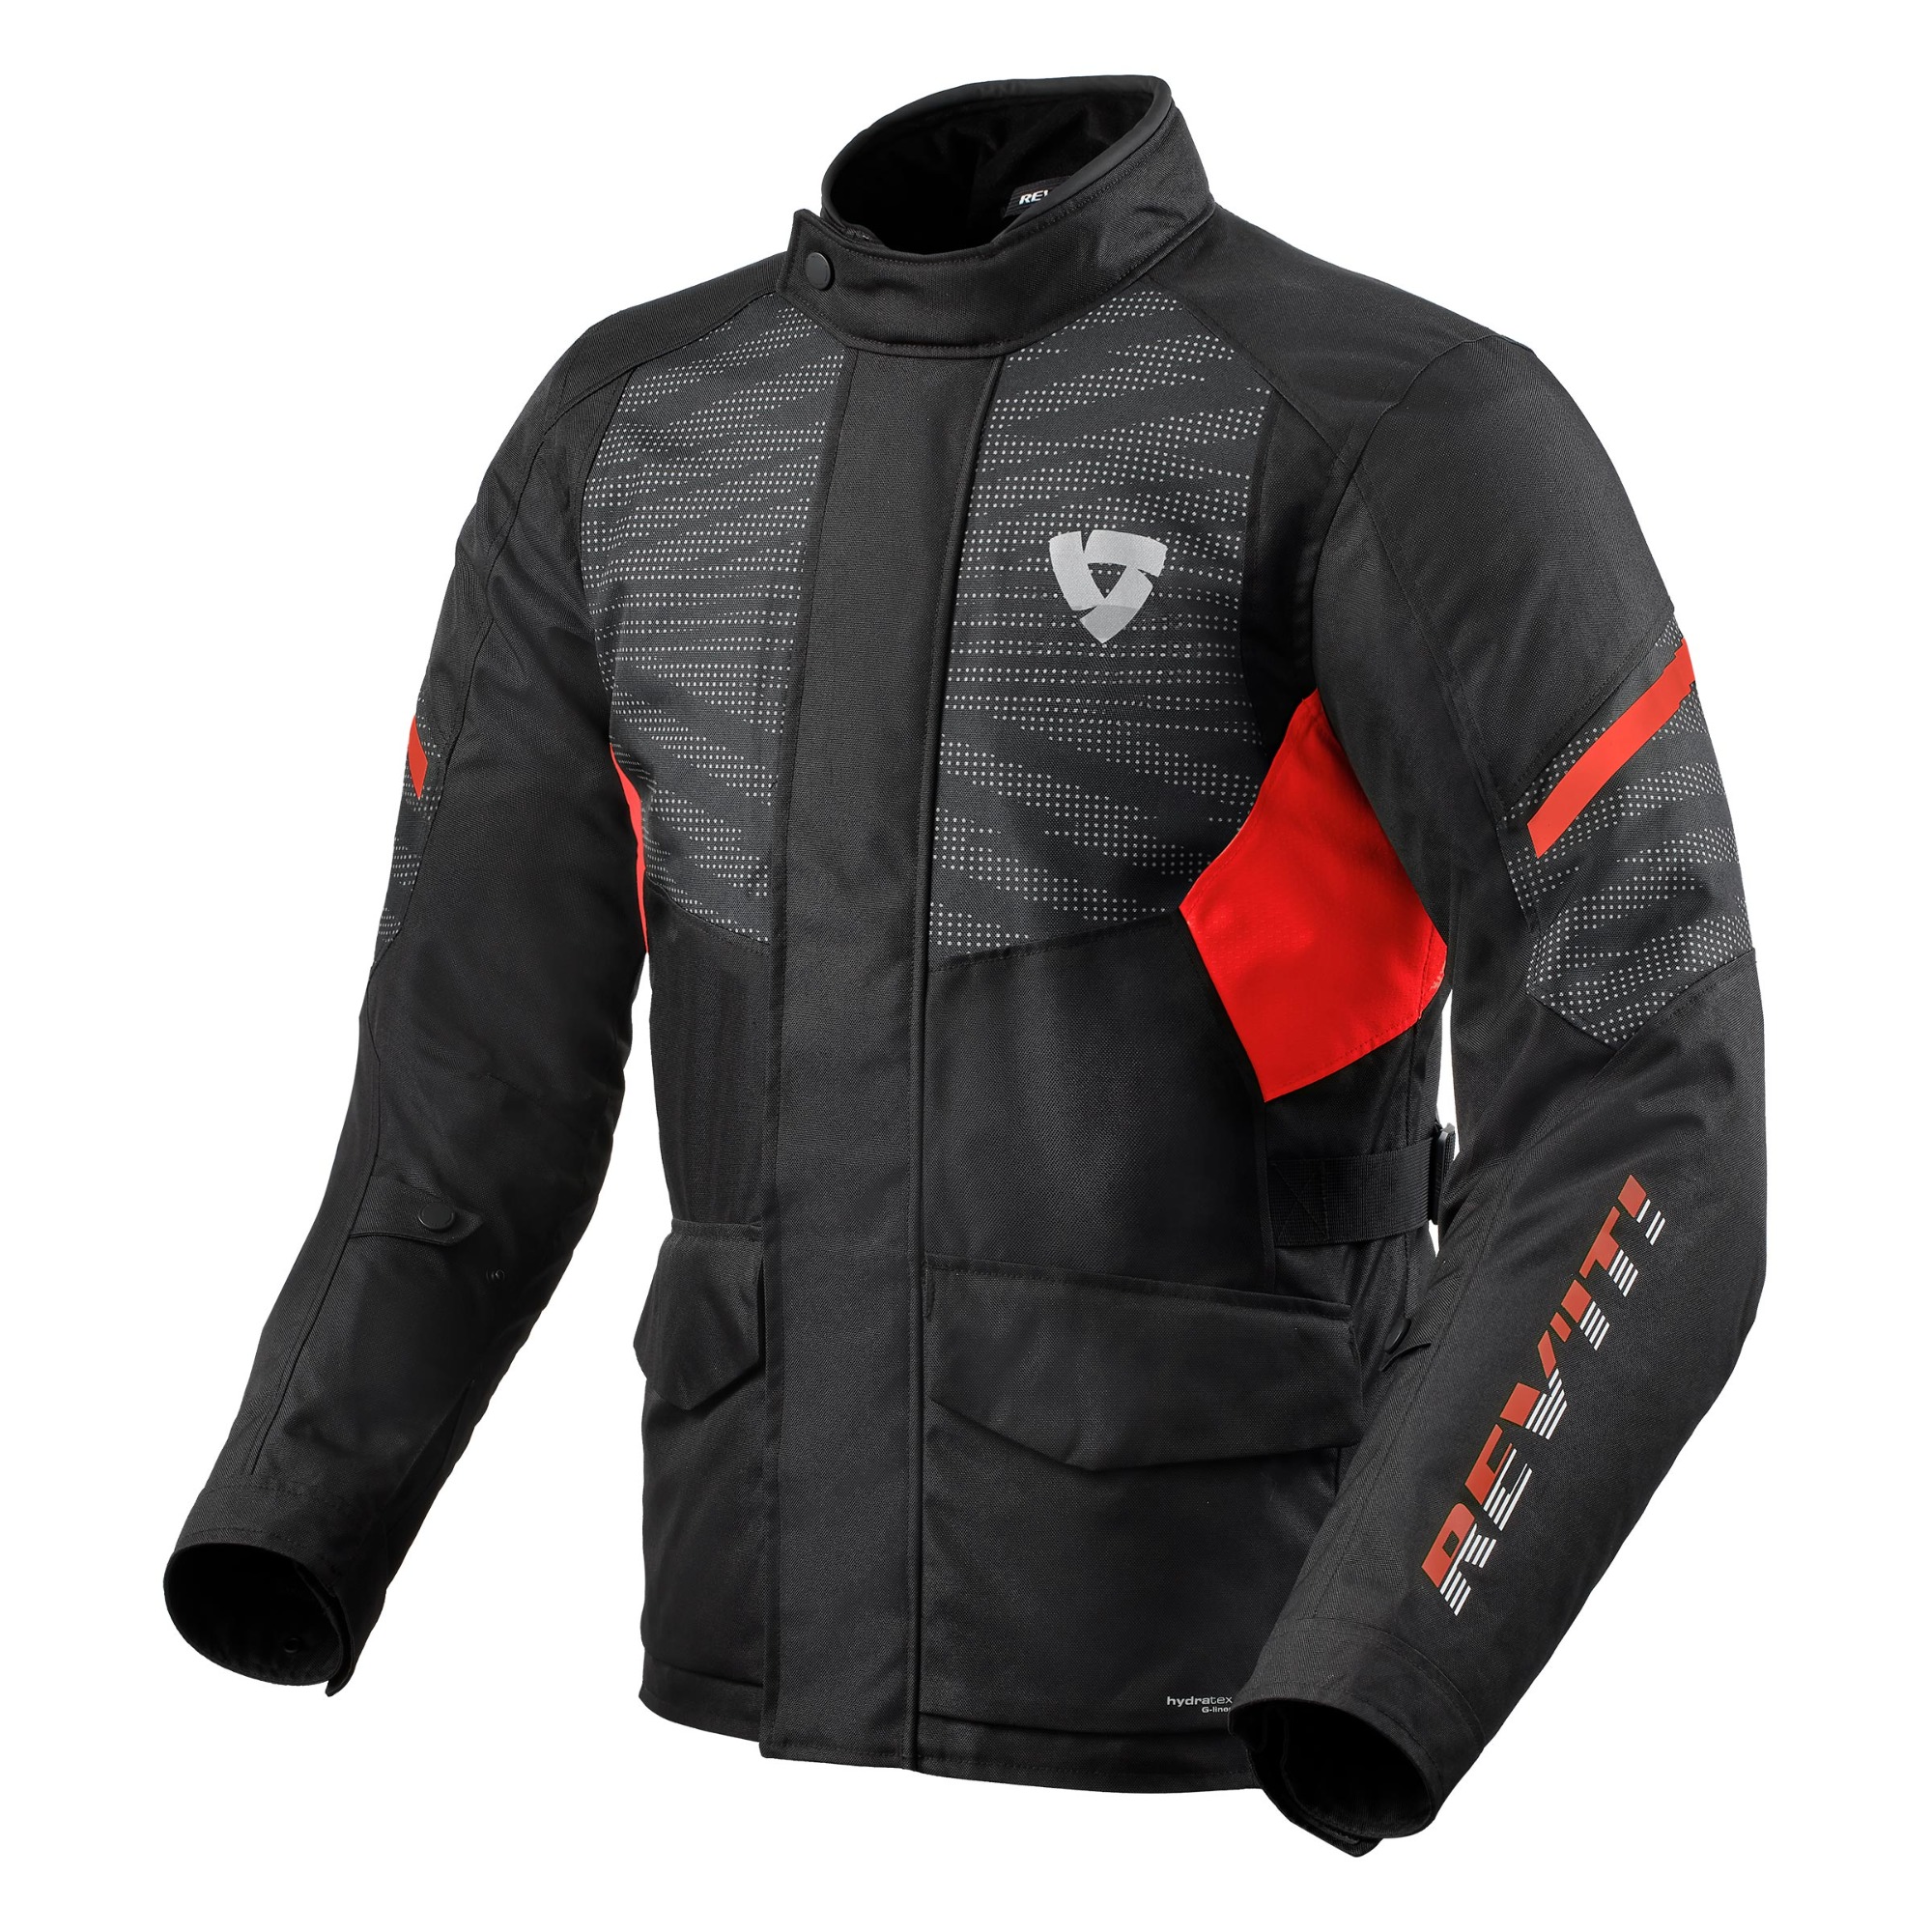 Image of REV'IT! Duke H2O Jacket Black Red Size 2XL ID 8700001346153